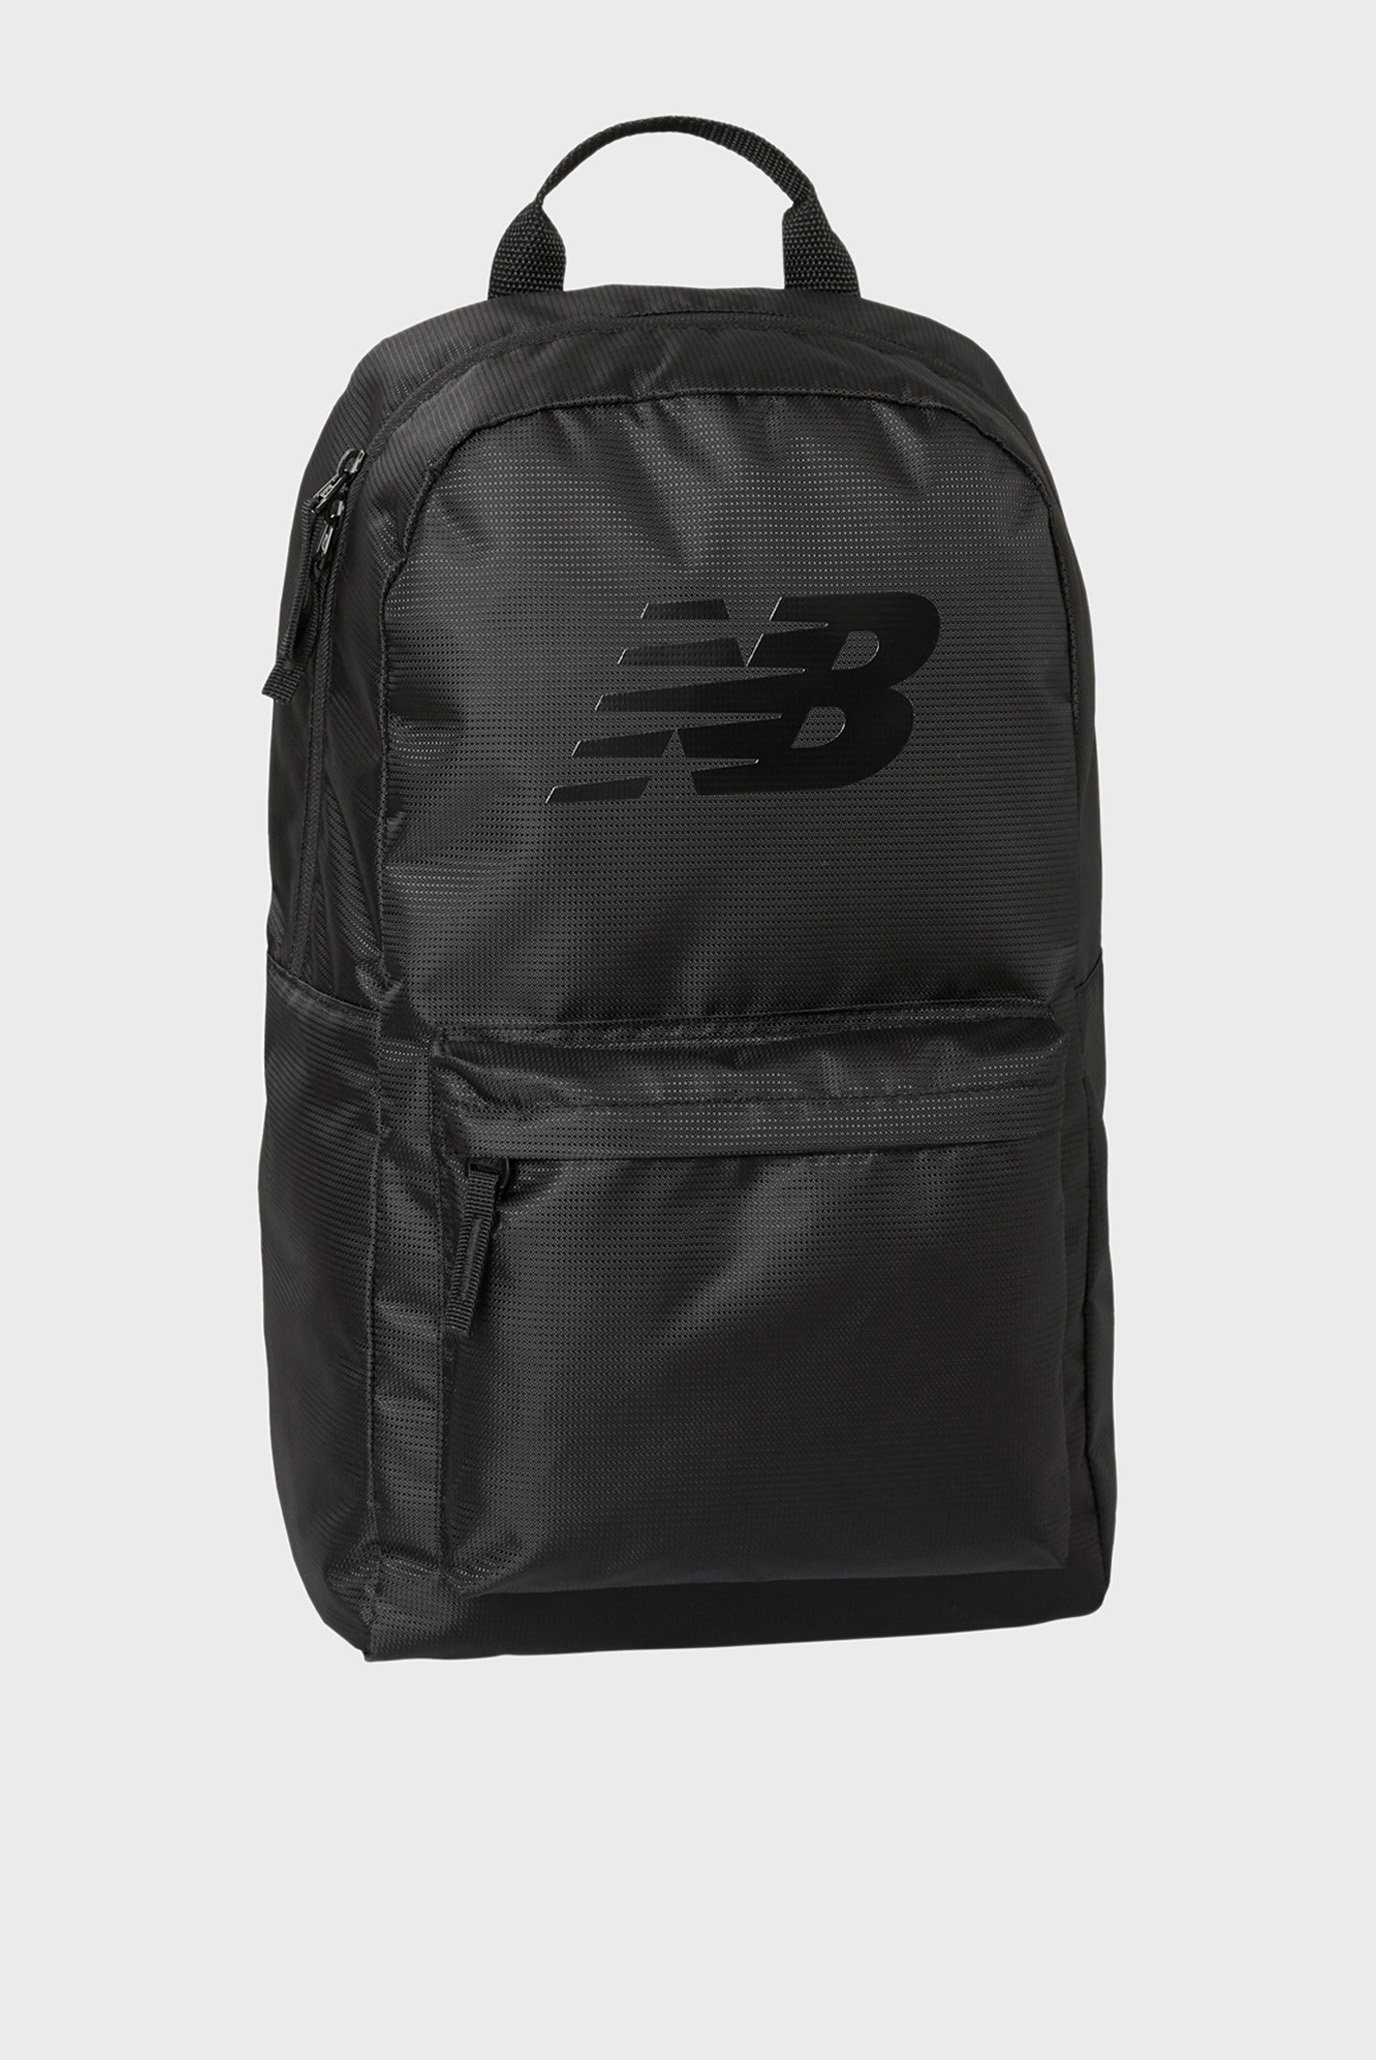 Черный рюкзак Opp Core 1